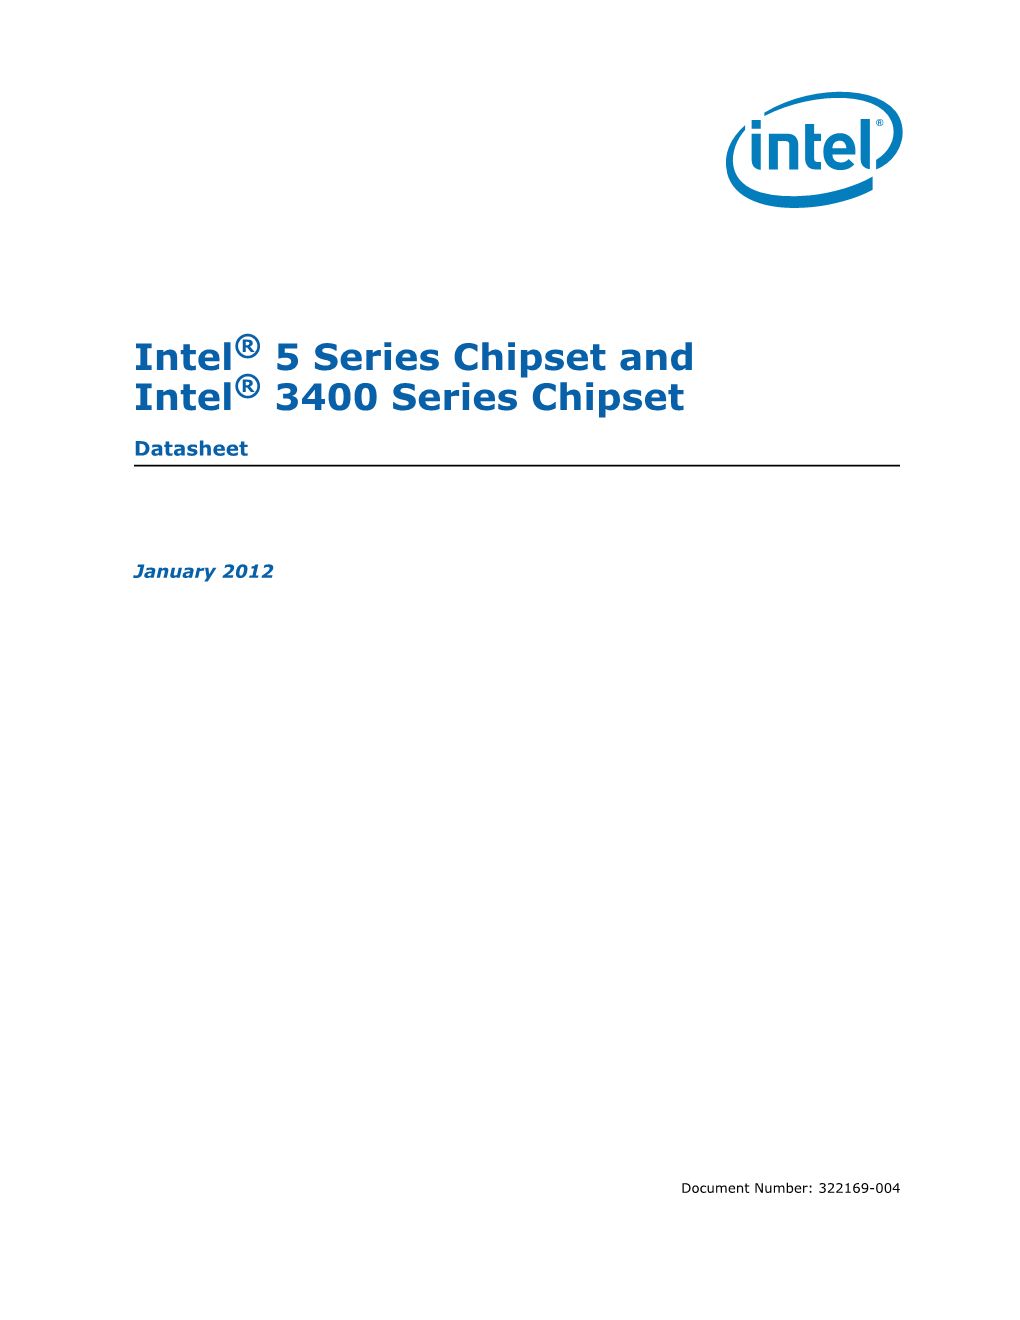 Intel® 5 Series Chipset and Intel® 3400 Series Chipset Datasheet